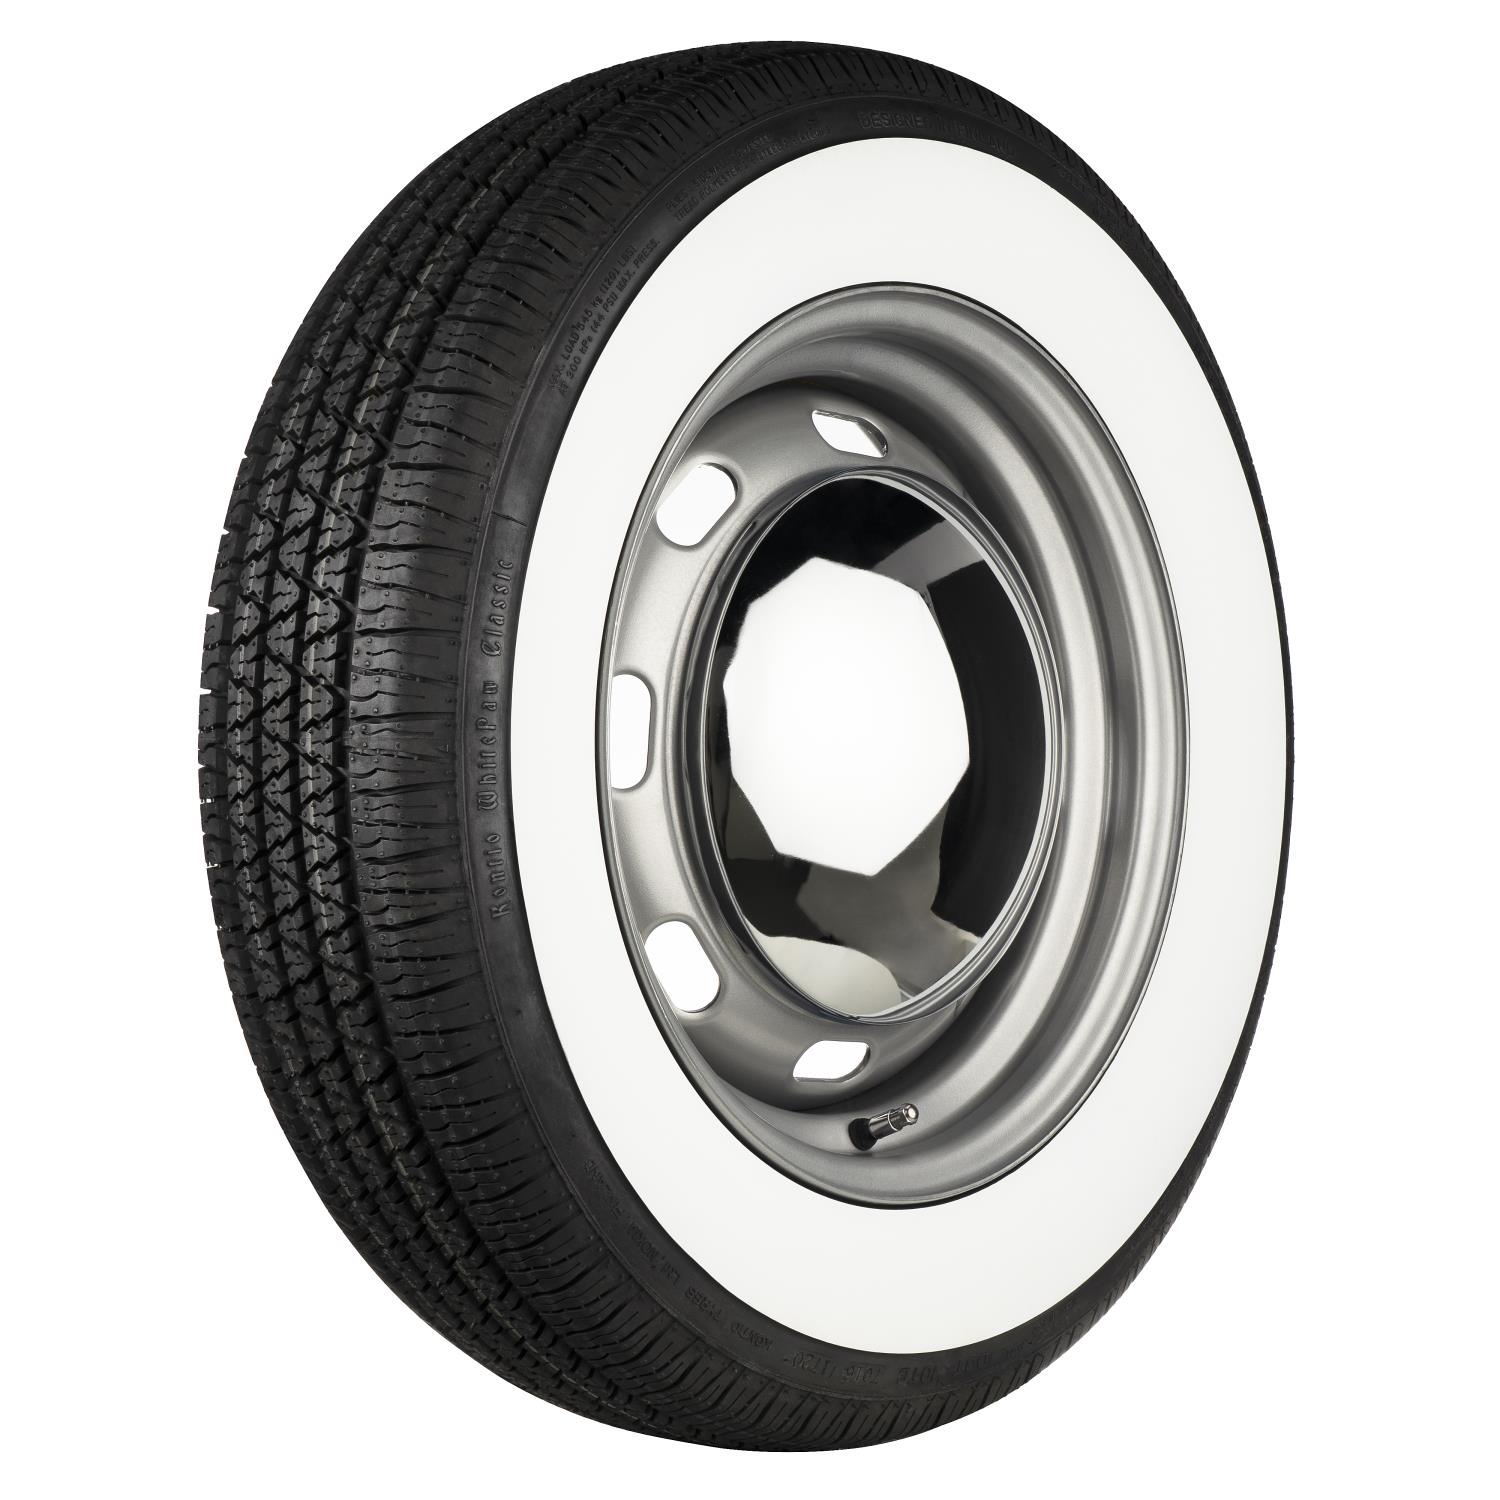 WhitePaw Classic Narrow Radial Tire, 165/80R15 [Whitewall]